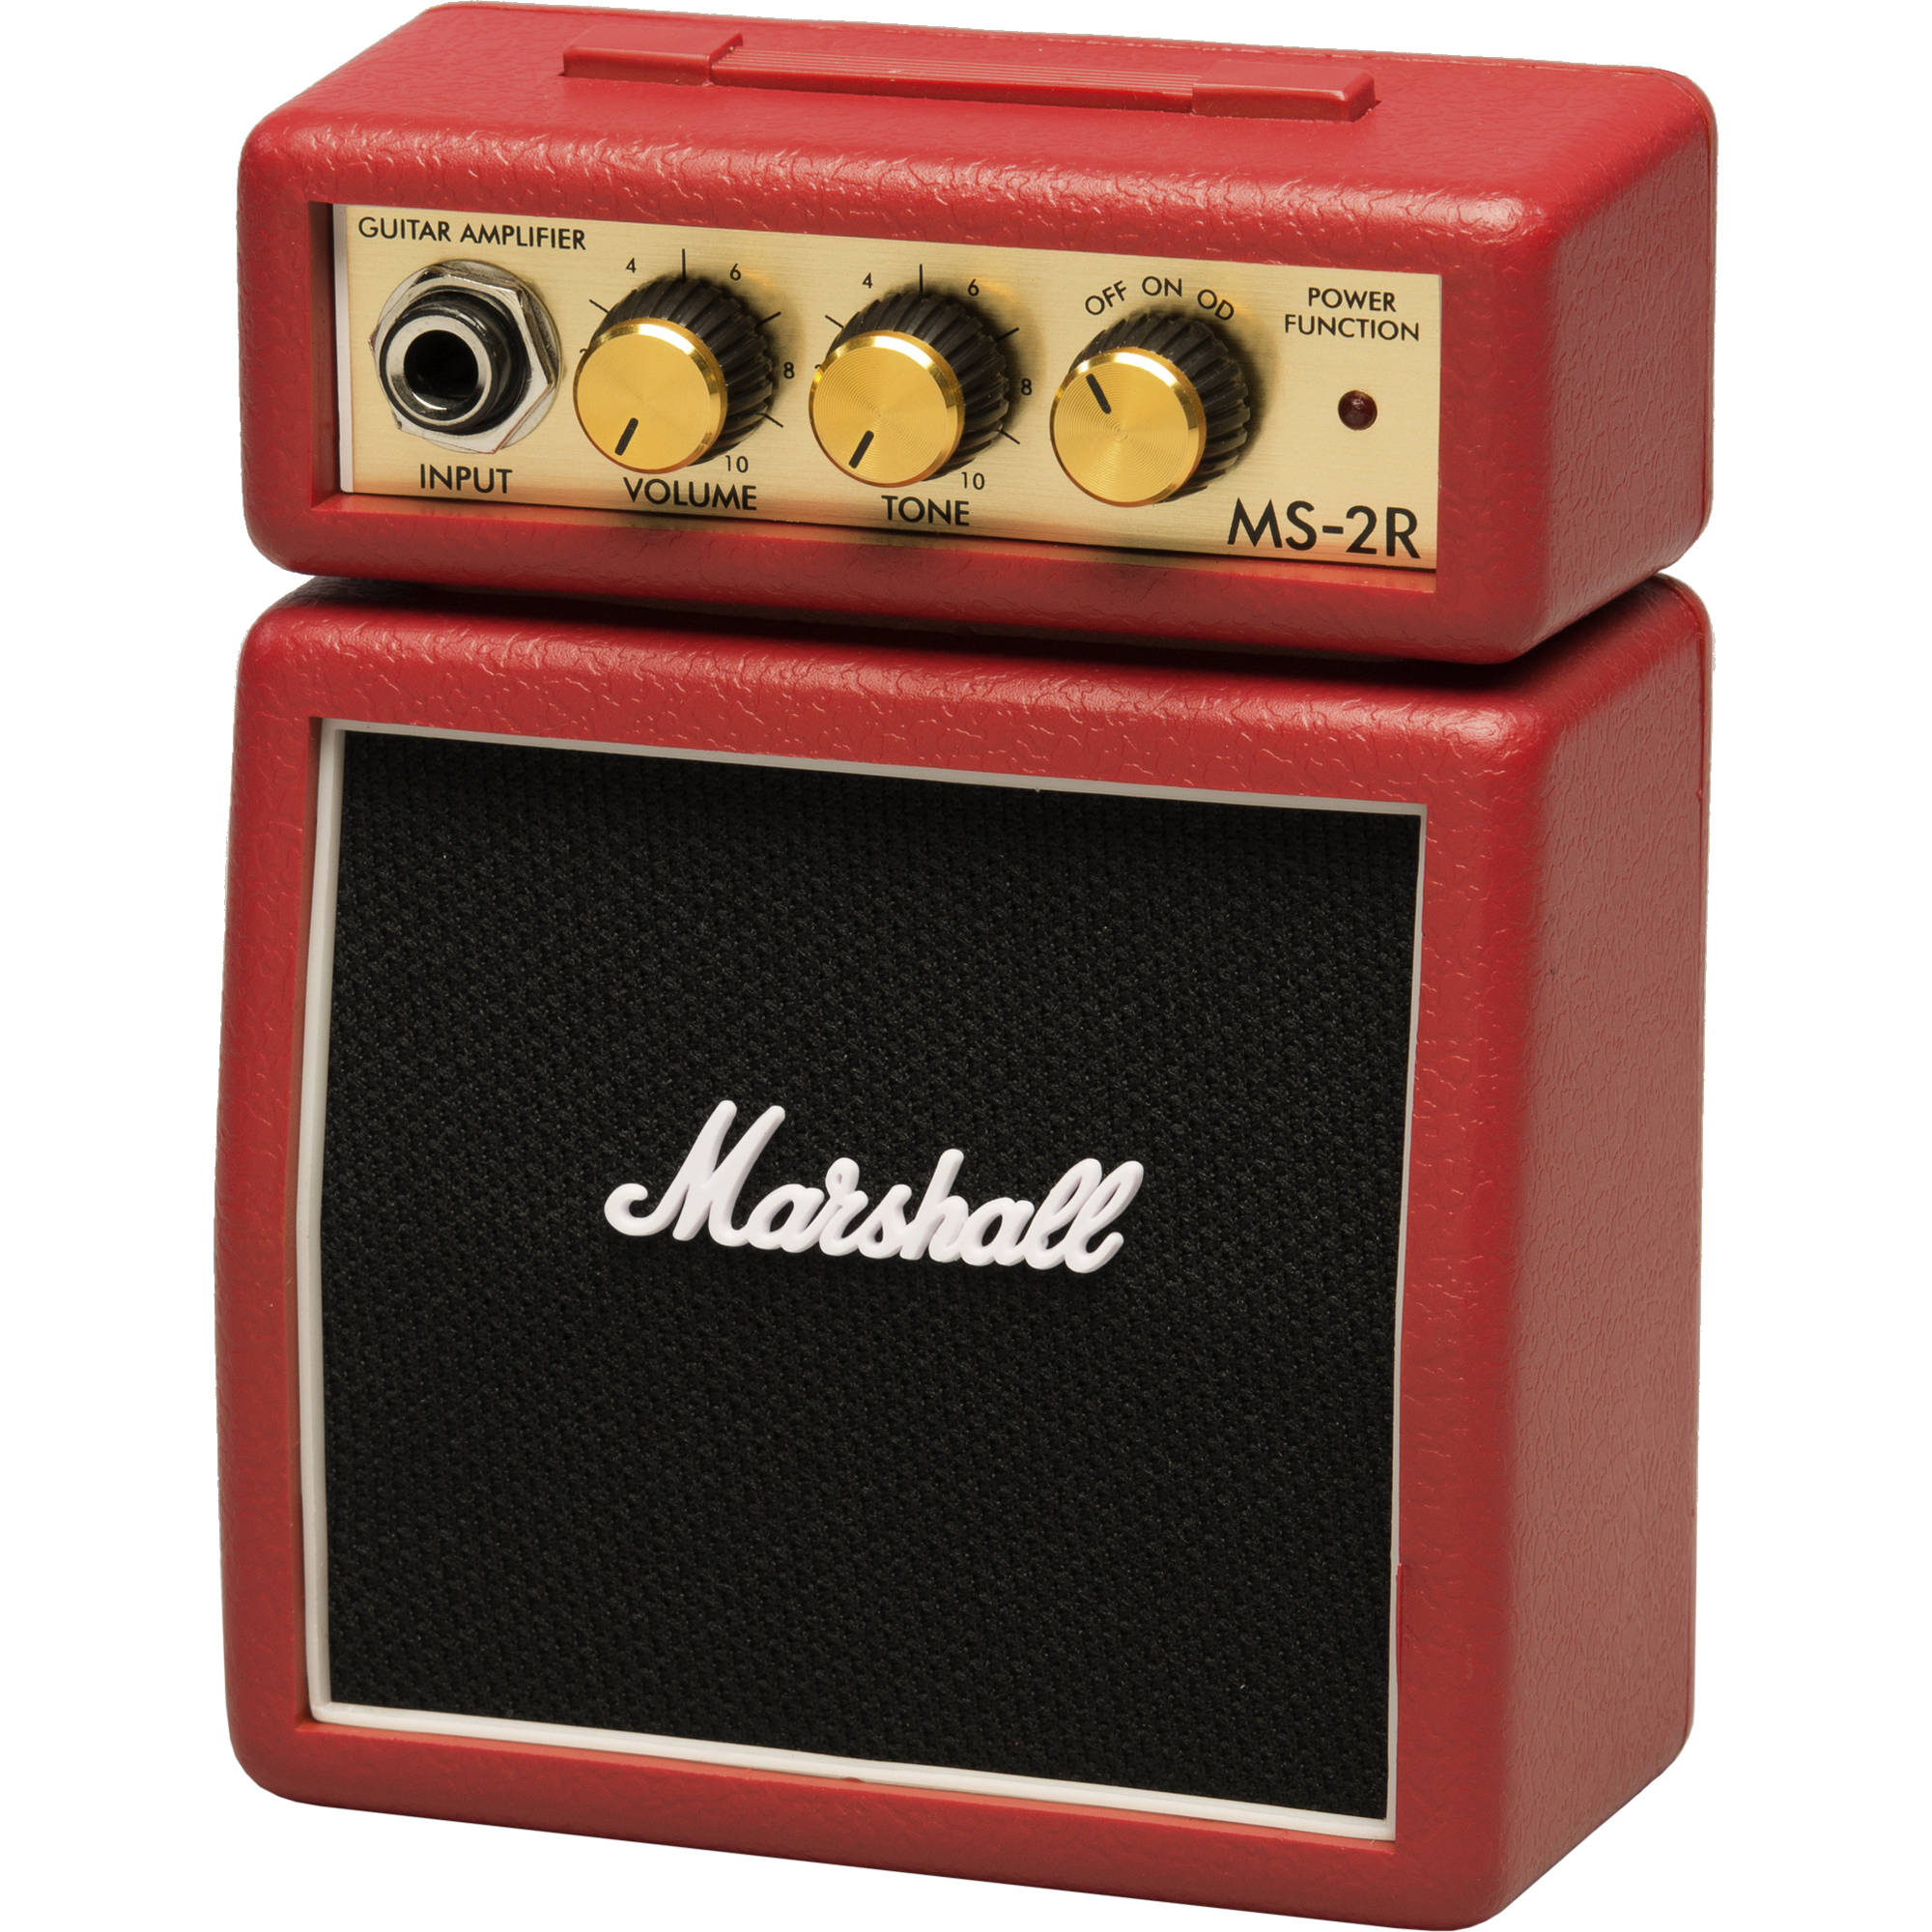 MARSHALL MS2R - micro ampli marshall pas cher - bauer musique